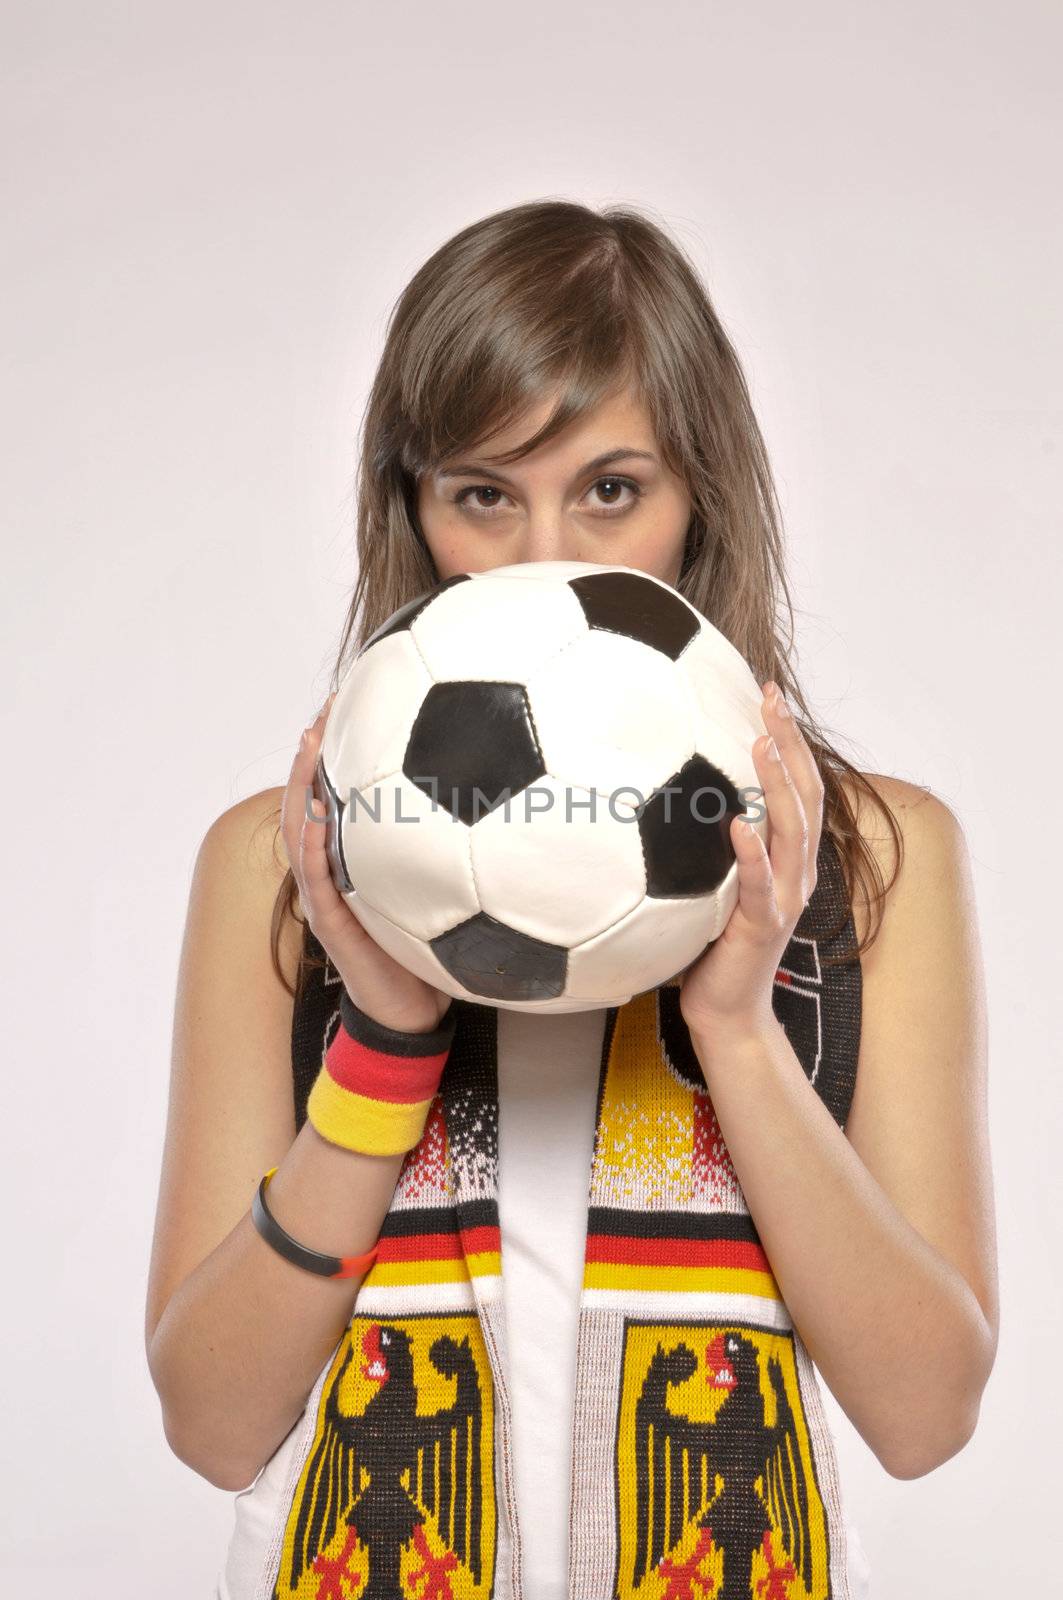 Soccer Fan Girl Holding The Ball  by nfx702